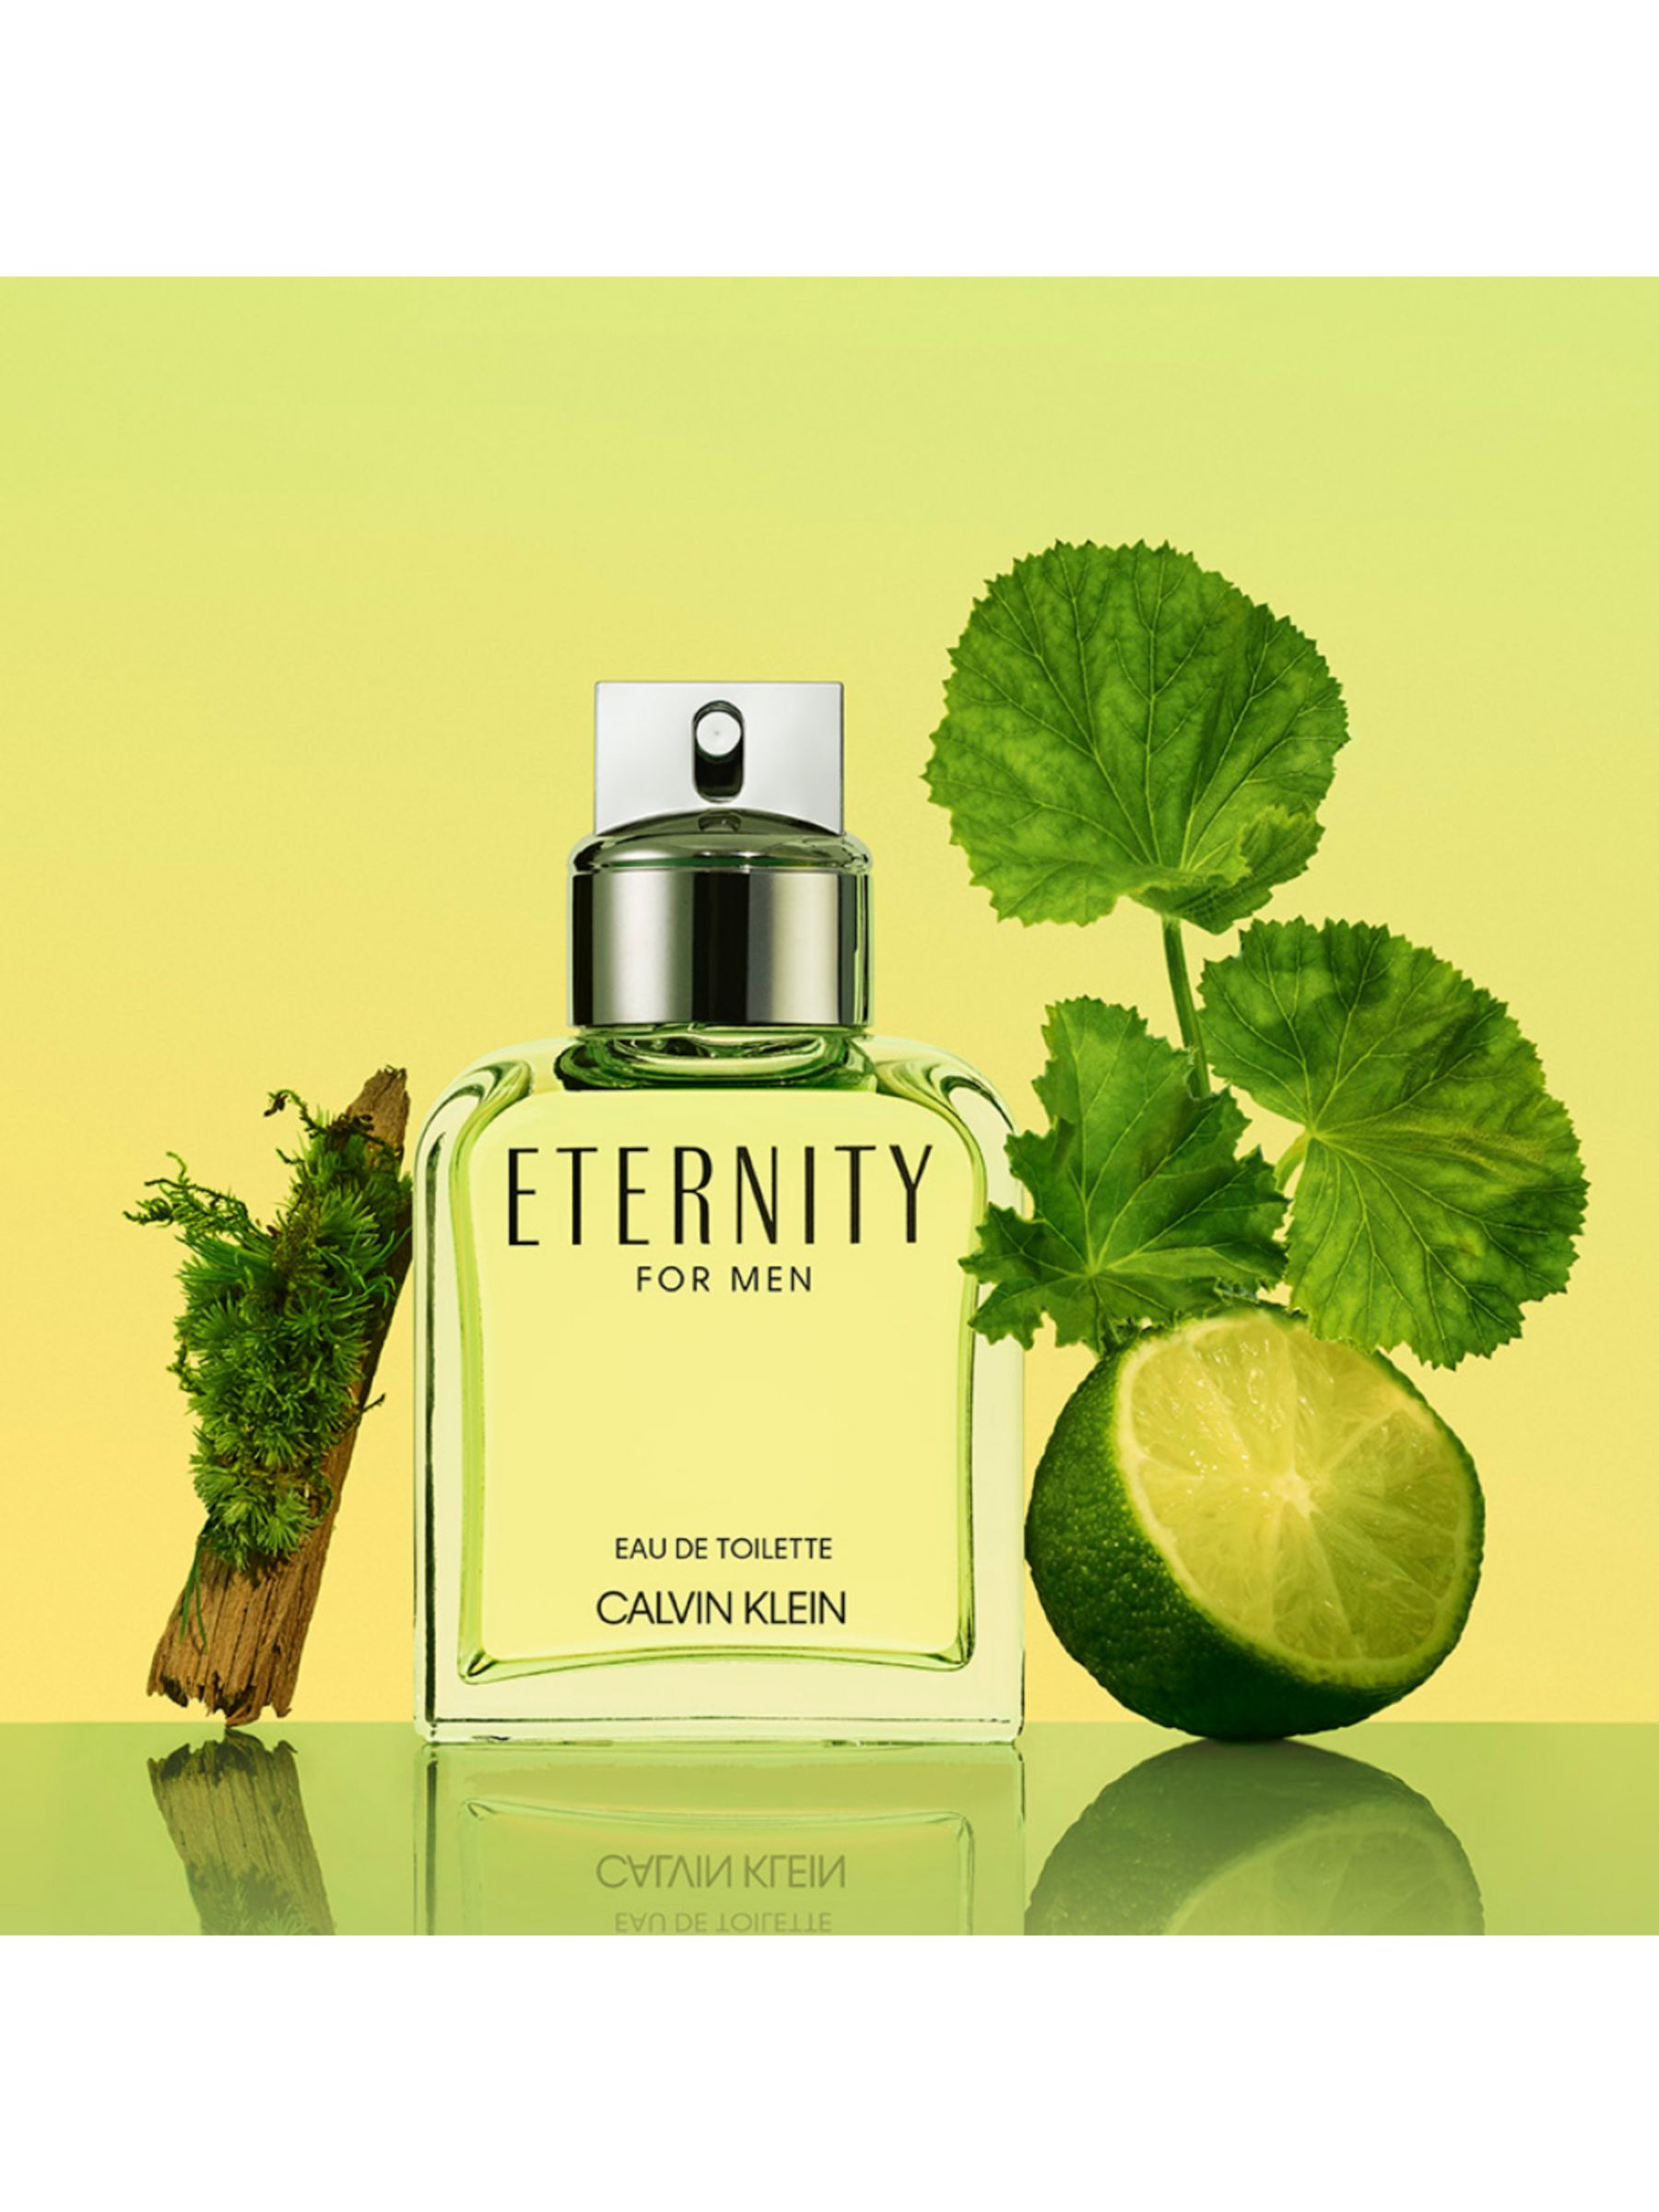 Calvin Klein Eternity for Men, Eau de Toilette Spray, 50ml 5